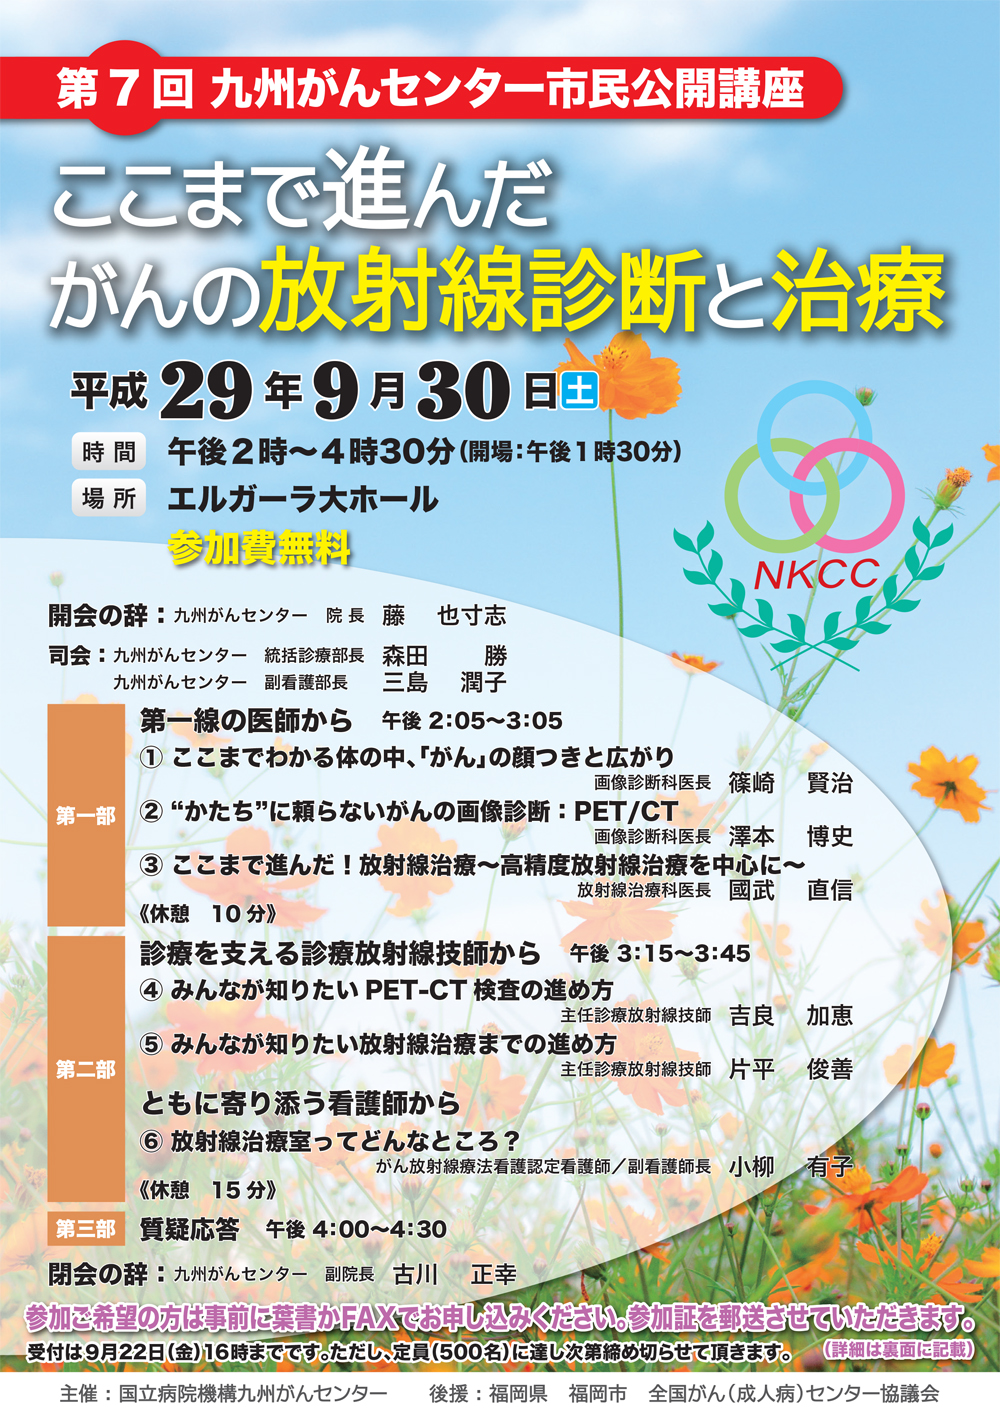 National Hospital Organization Kyushu Cancer Center